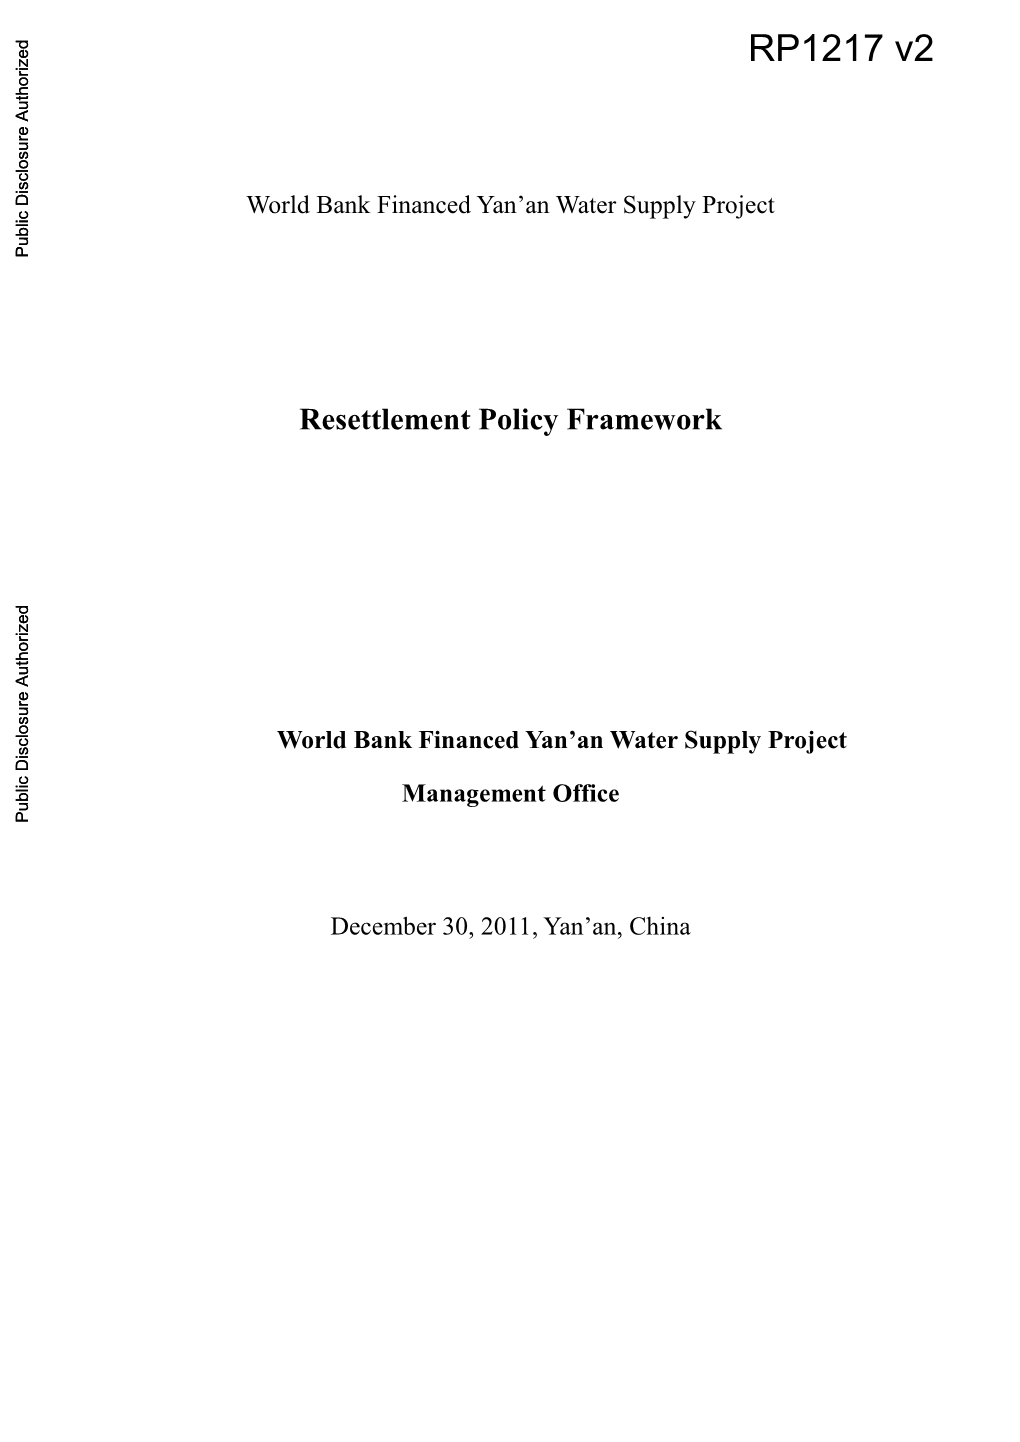 Resettlement Policy Framework World Bank